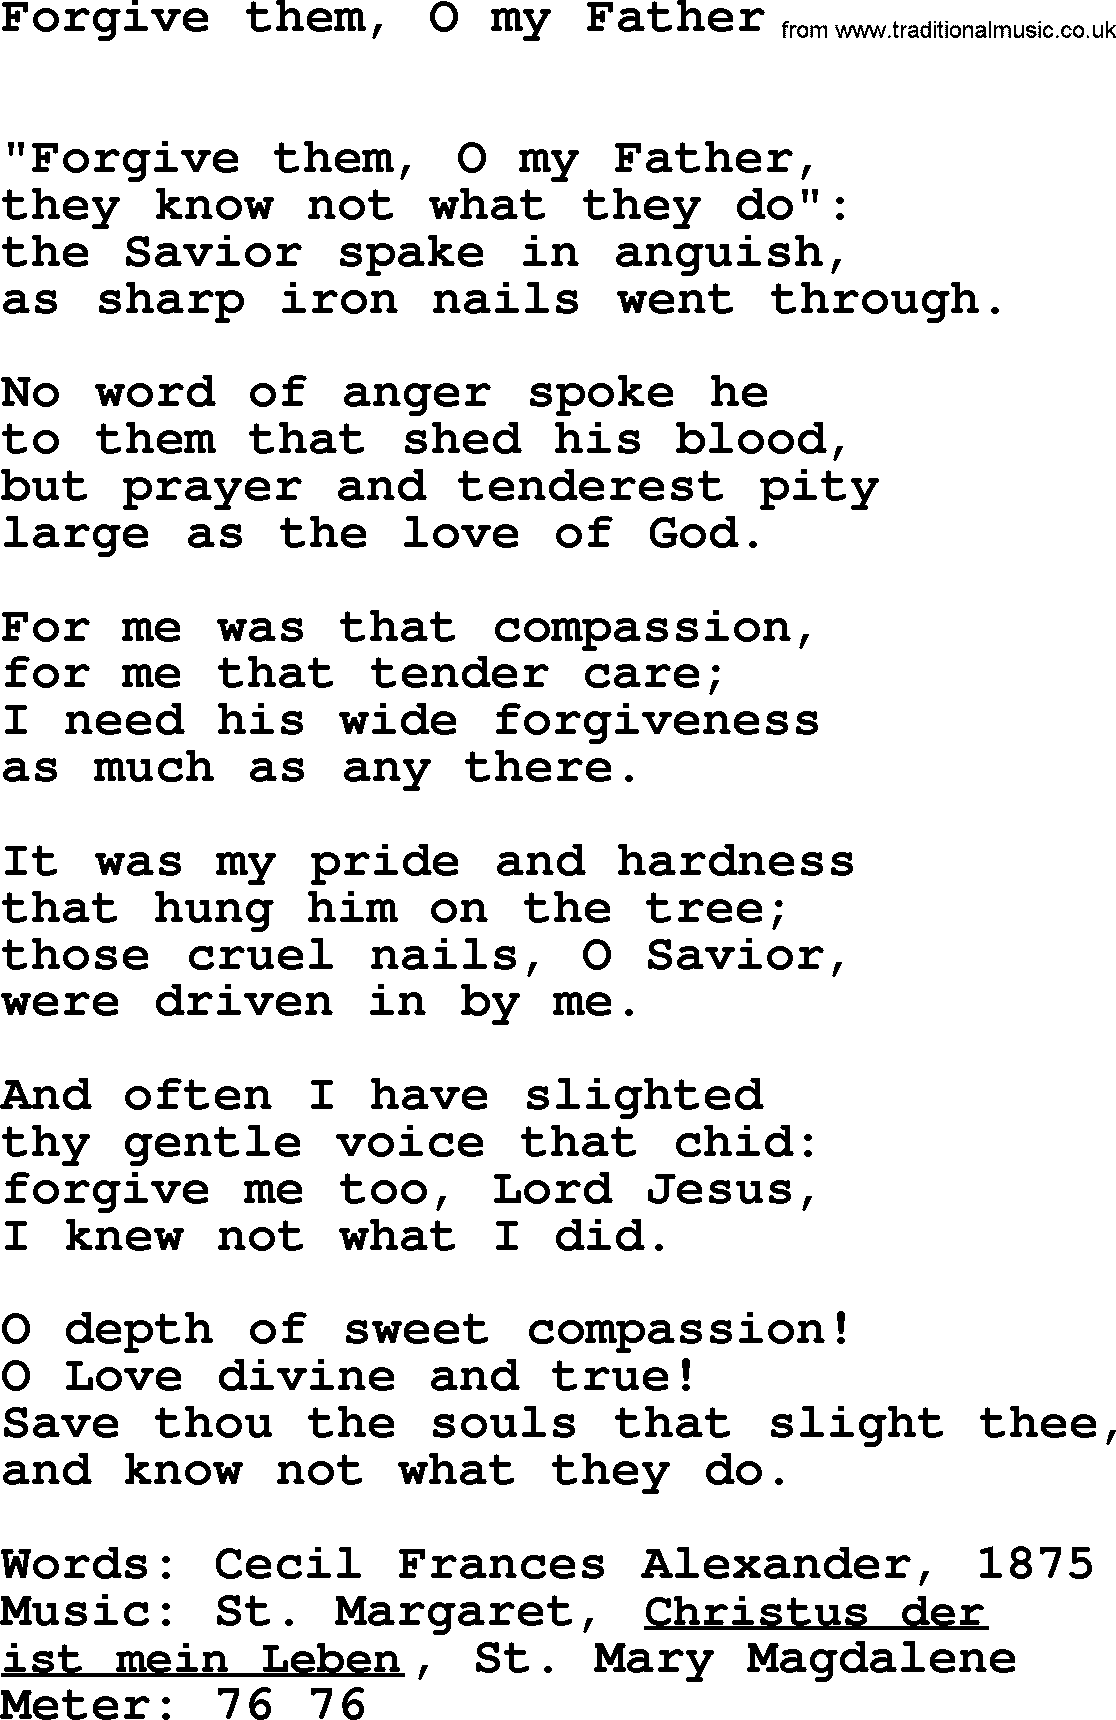 Book of Common Praise Hymn: Forgive Them, O My Father.txt lyrics with midi music